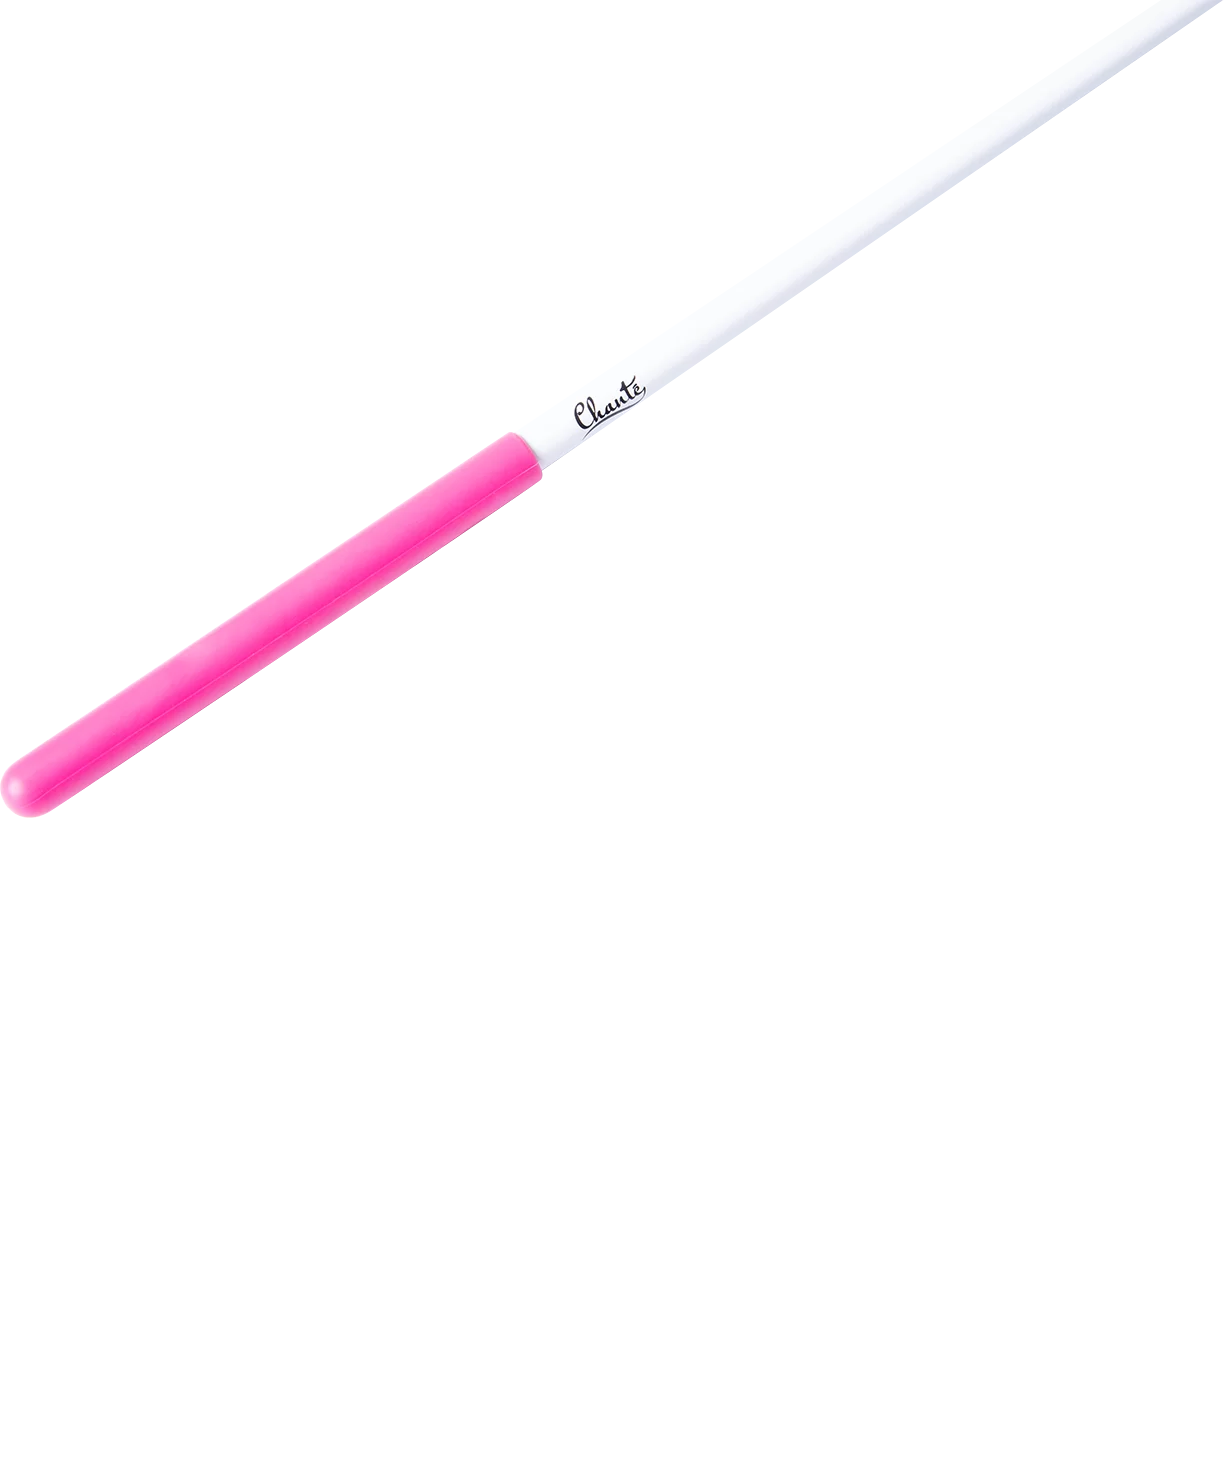 Фото Палочка для ленты 50 см с карабином Chanté CH15-500-21-31 Barre White/Pink УТ-00017191 со склада магазина СпортСЕ